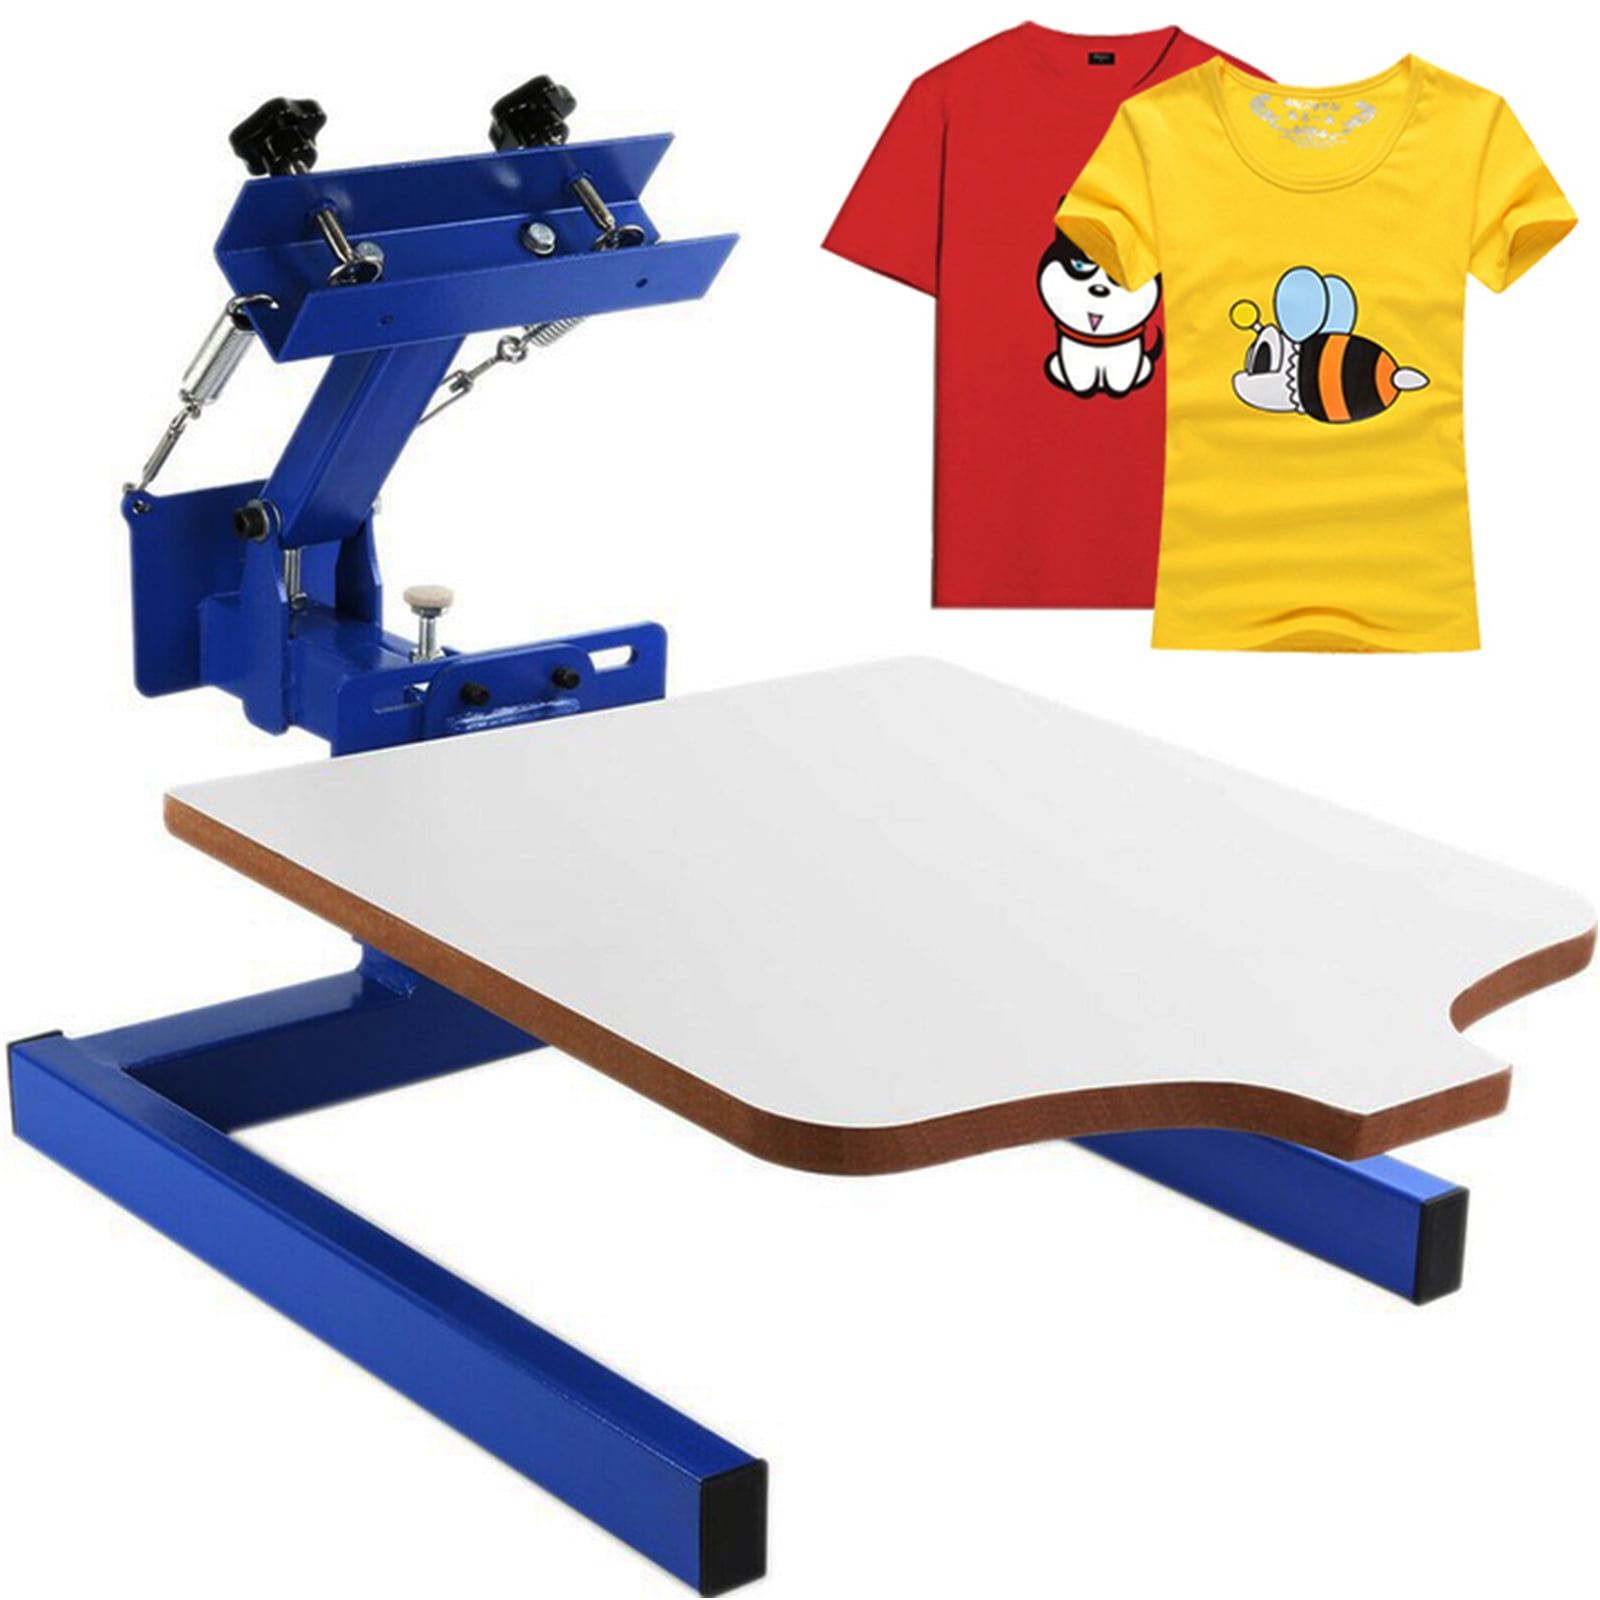 VEVOR Screen Printing Machine 17.7x21.7Inch Screen Printing Press 4 Color 2 Station Silk Screen Printing for T-Shirt DIY Printing Removable Pallet 